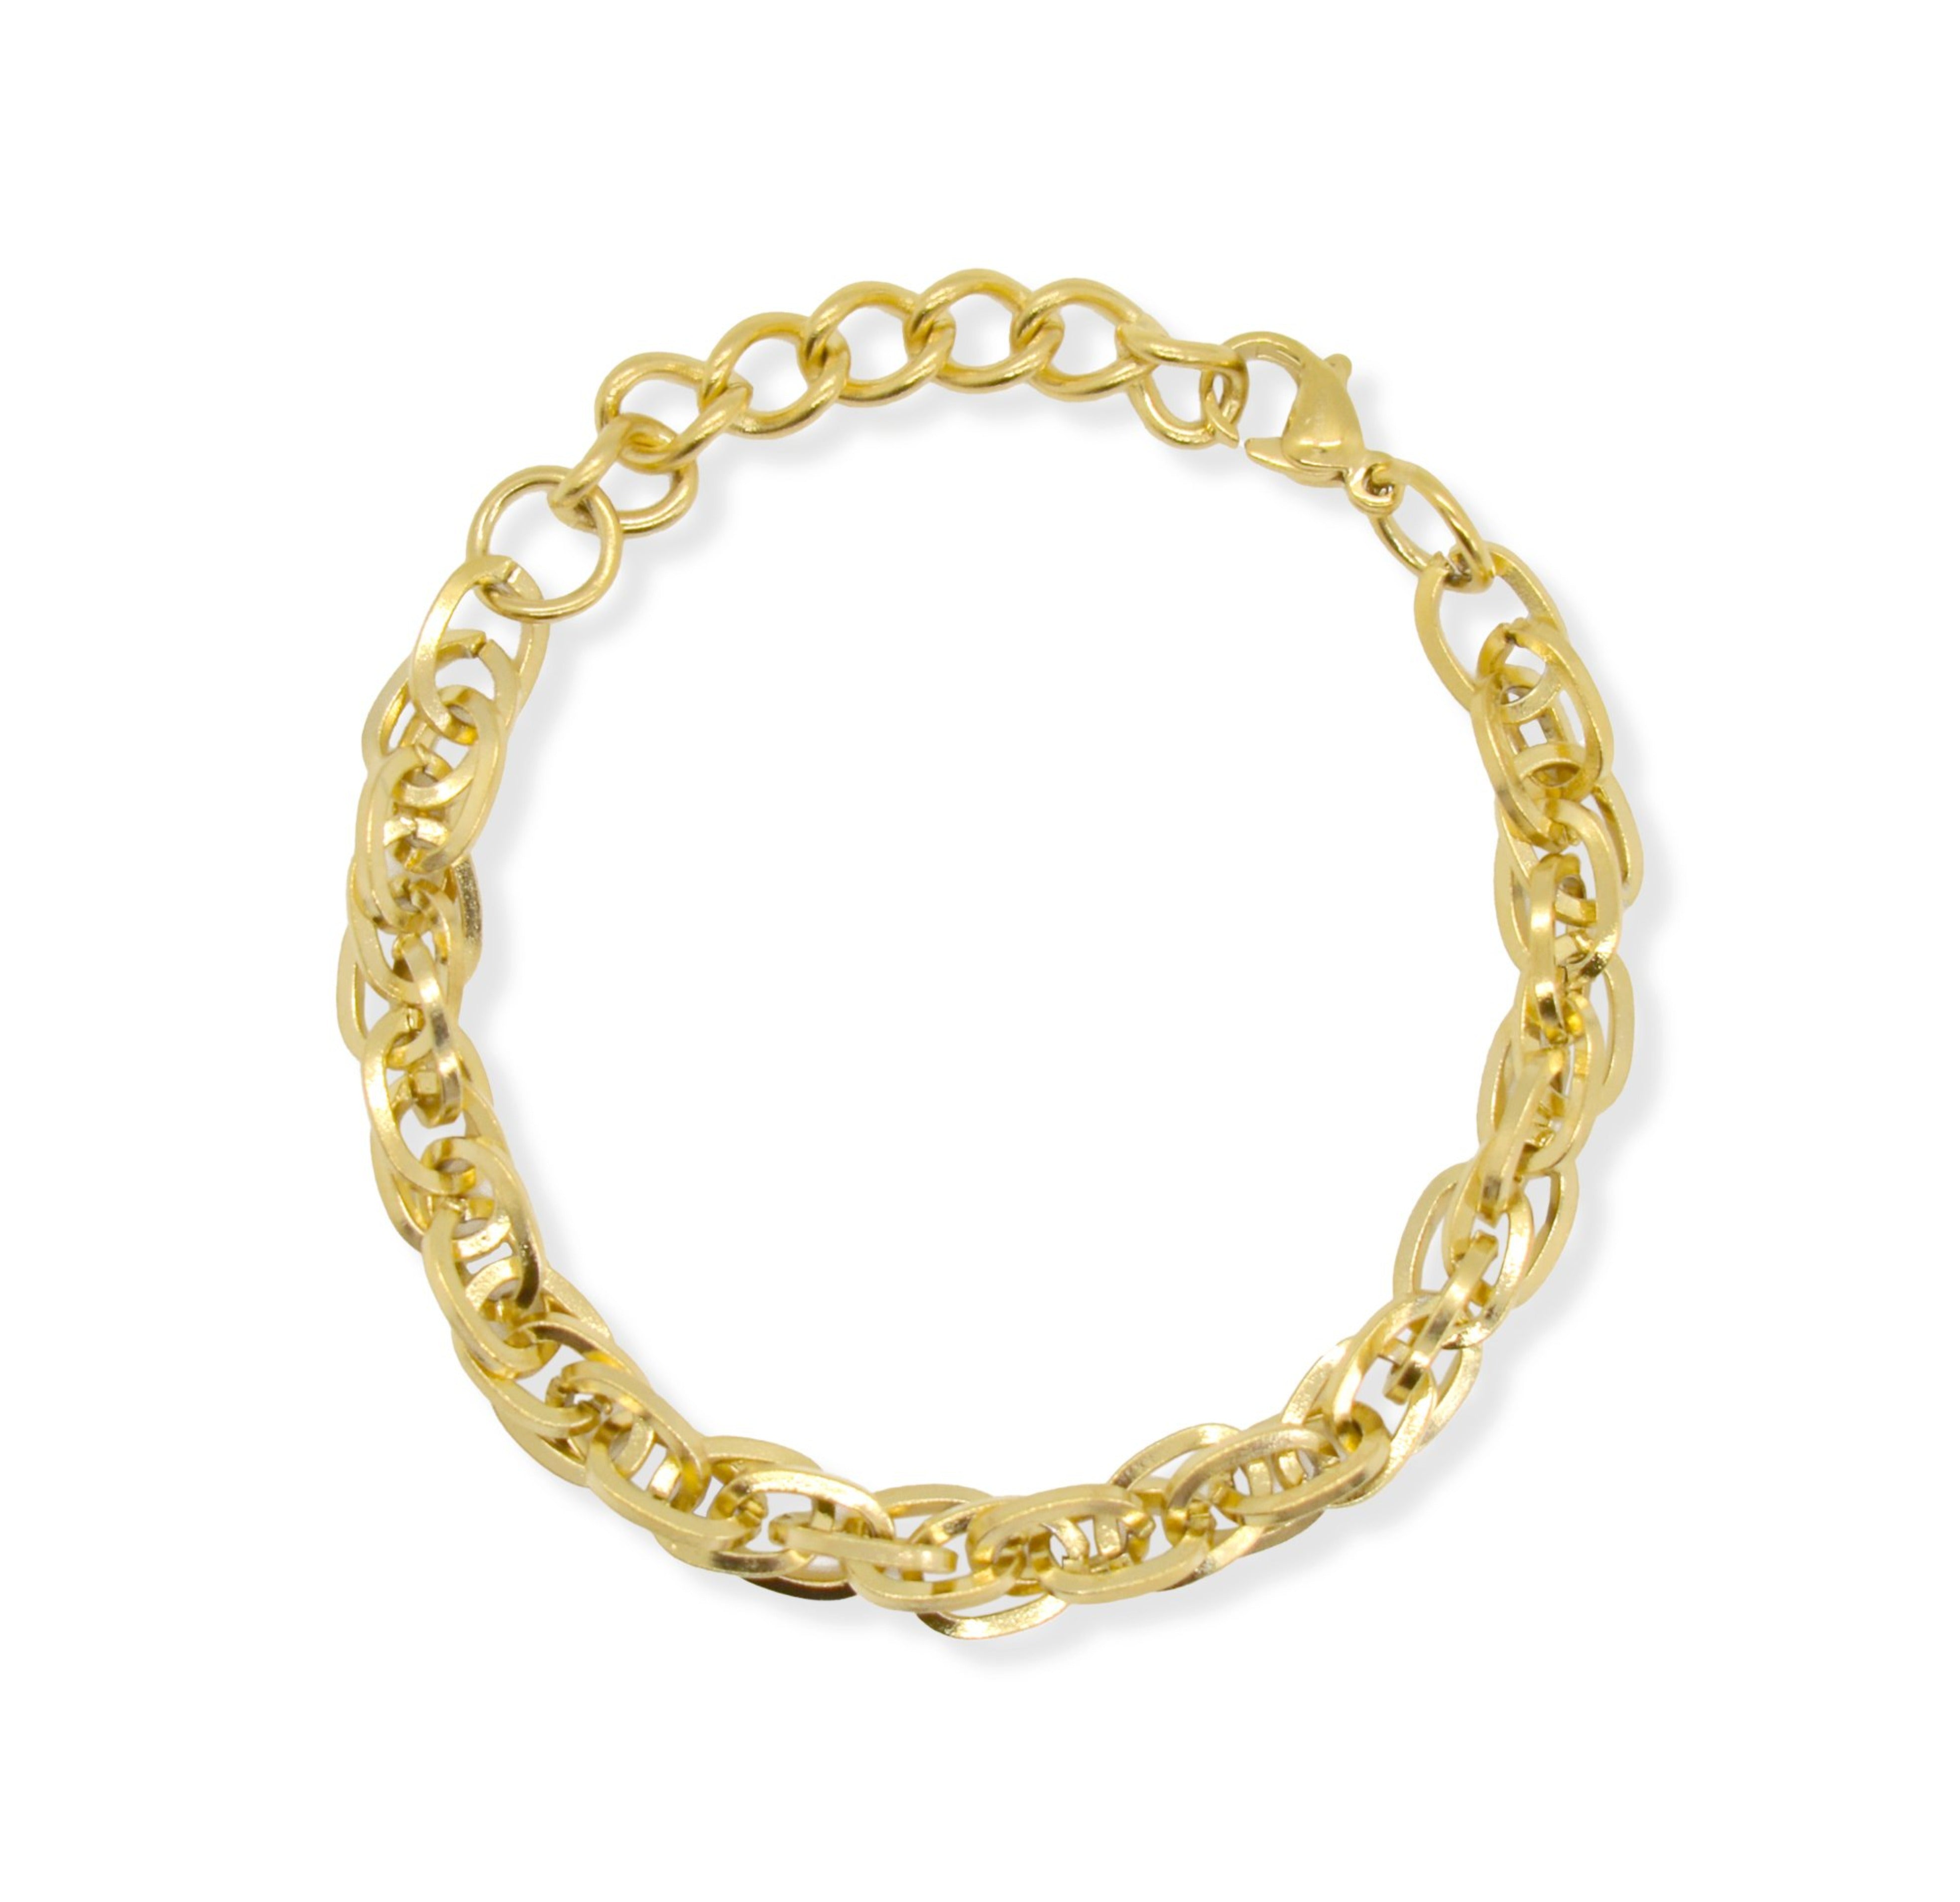 gold rope chain bracelet waterproof